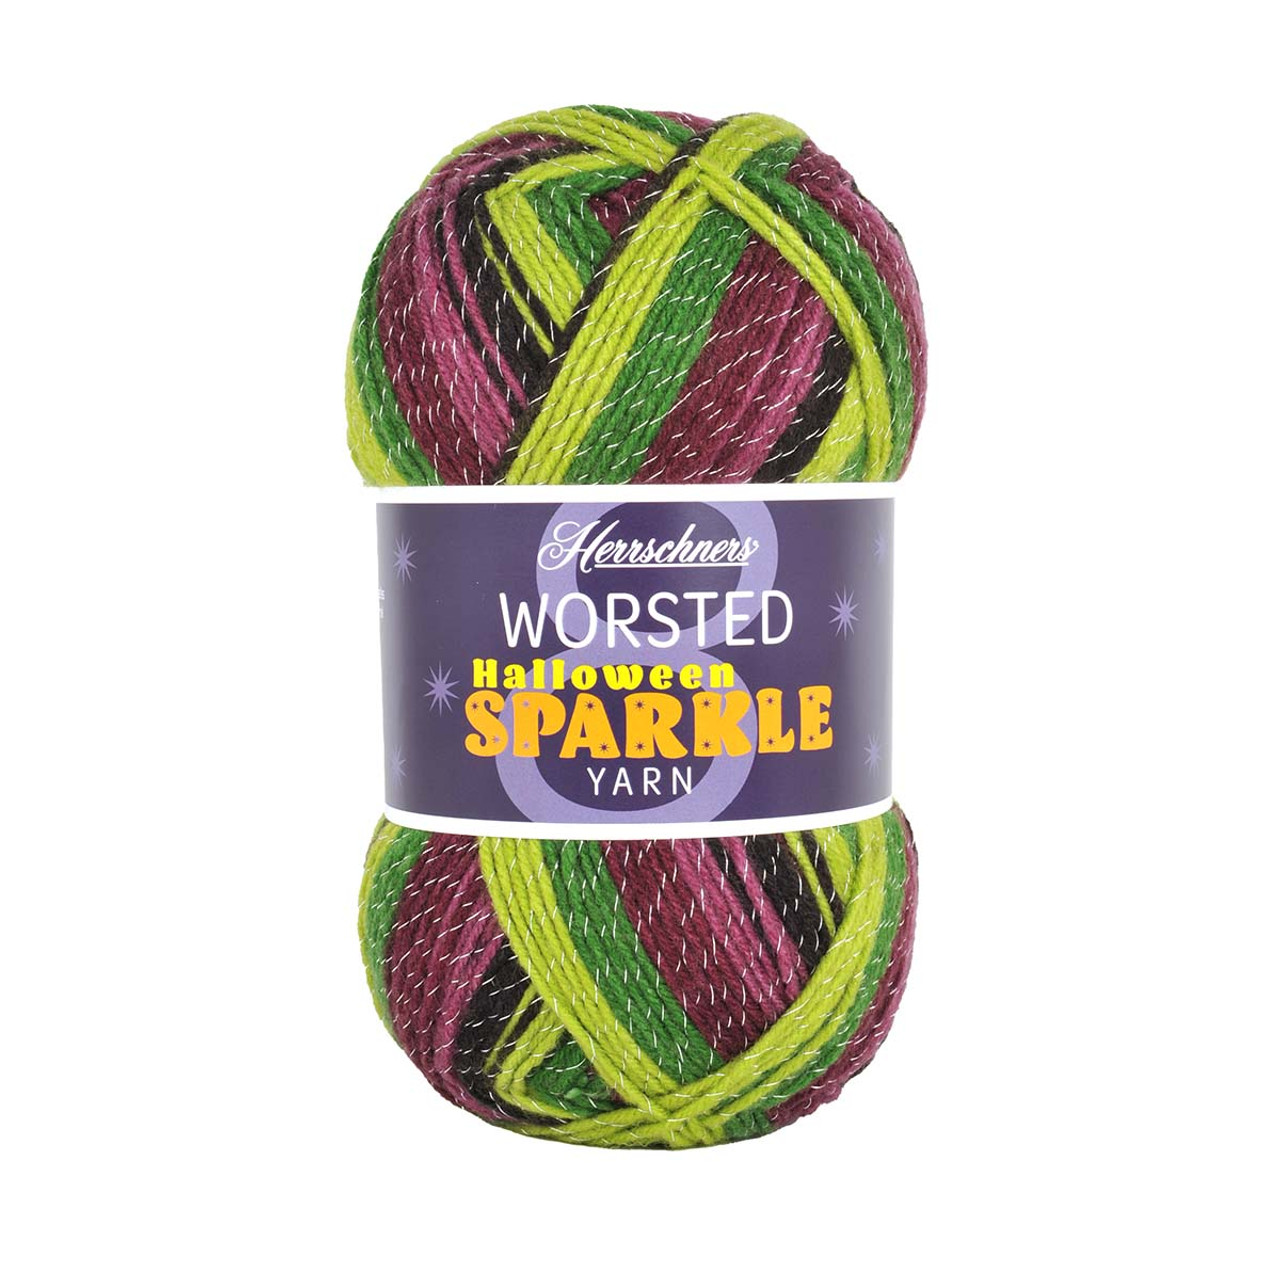 Yarn Hack? Turn a strand of worsted weight yarn into chunky yarn 